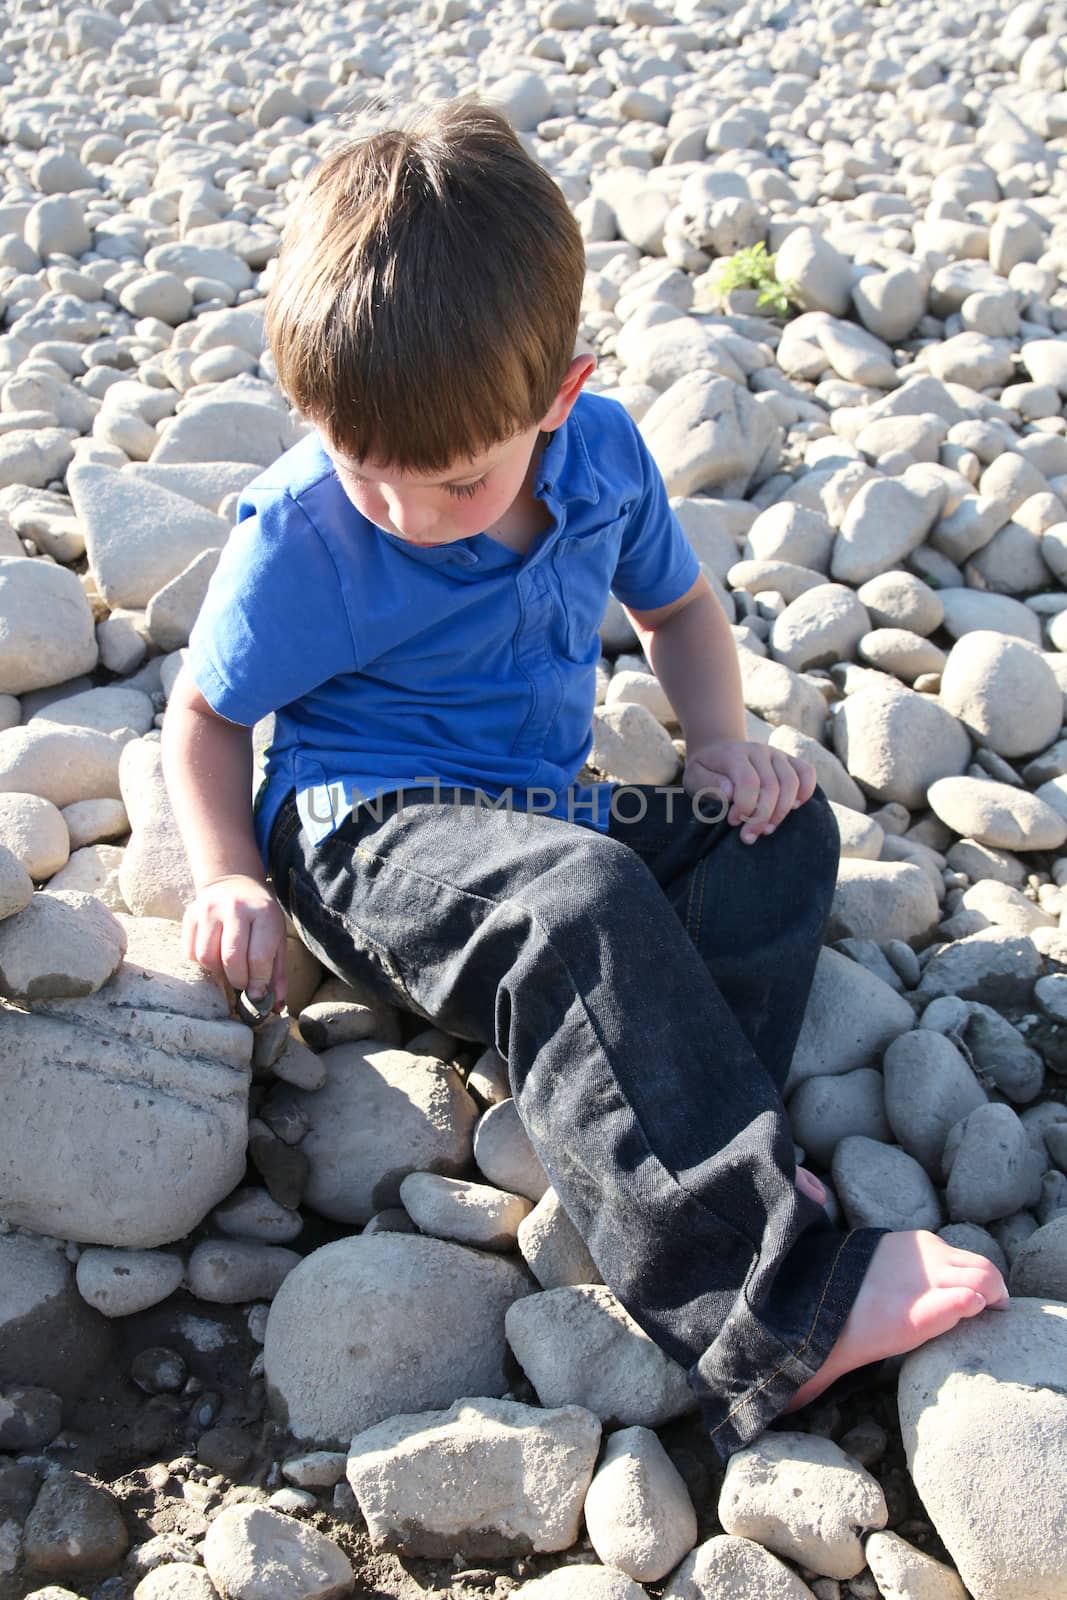 Younb boy sitting outside on pebble beach